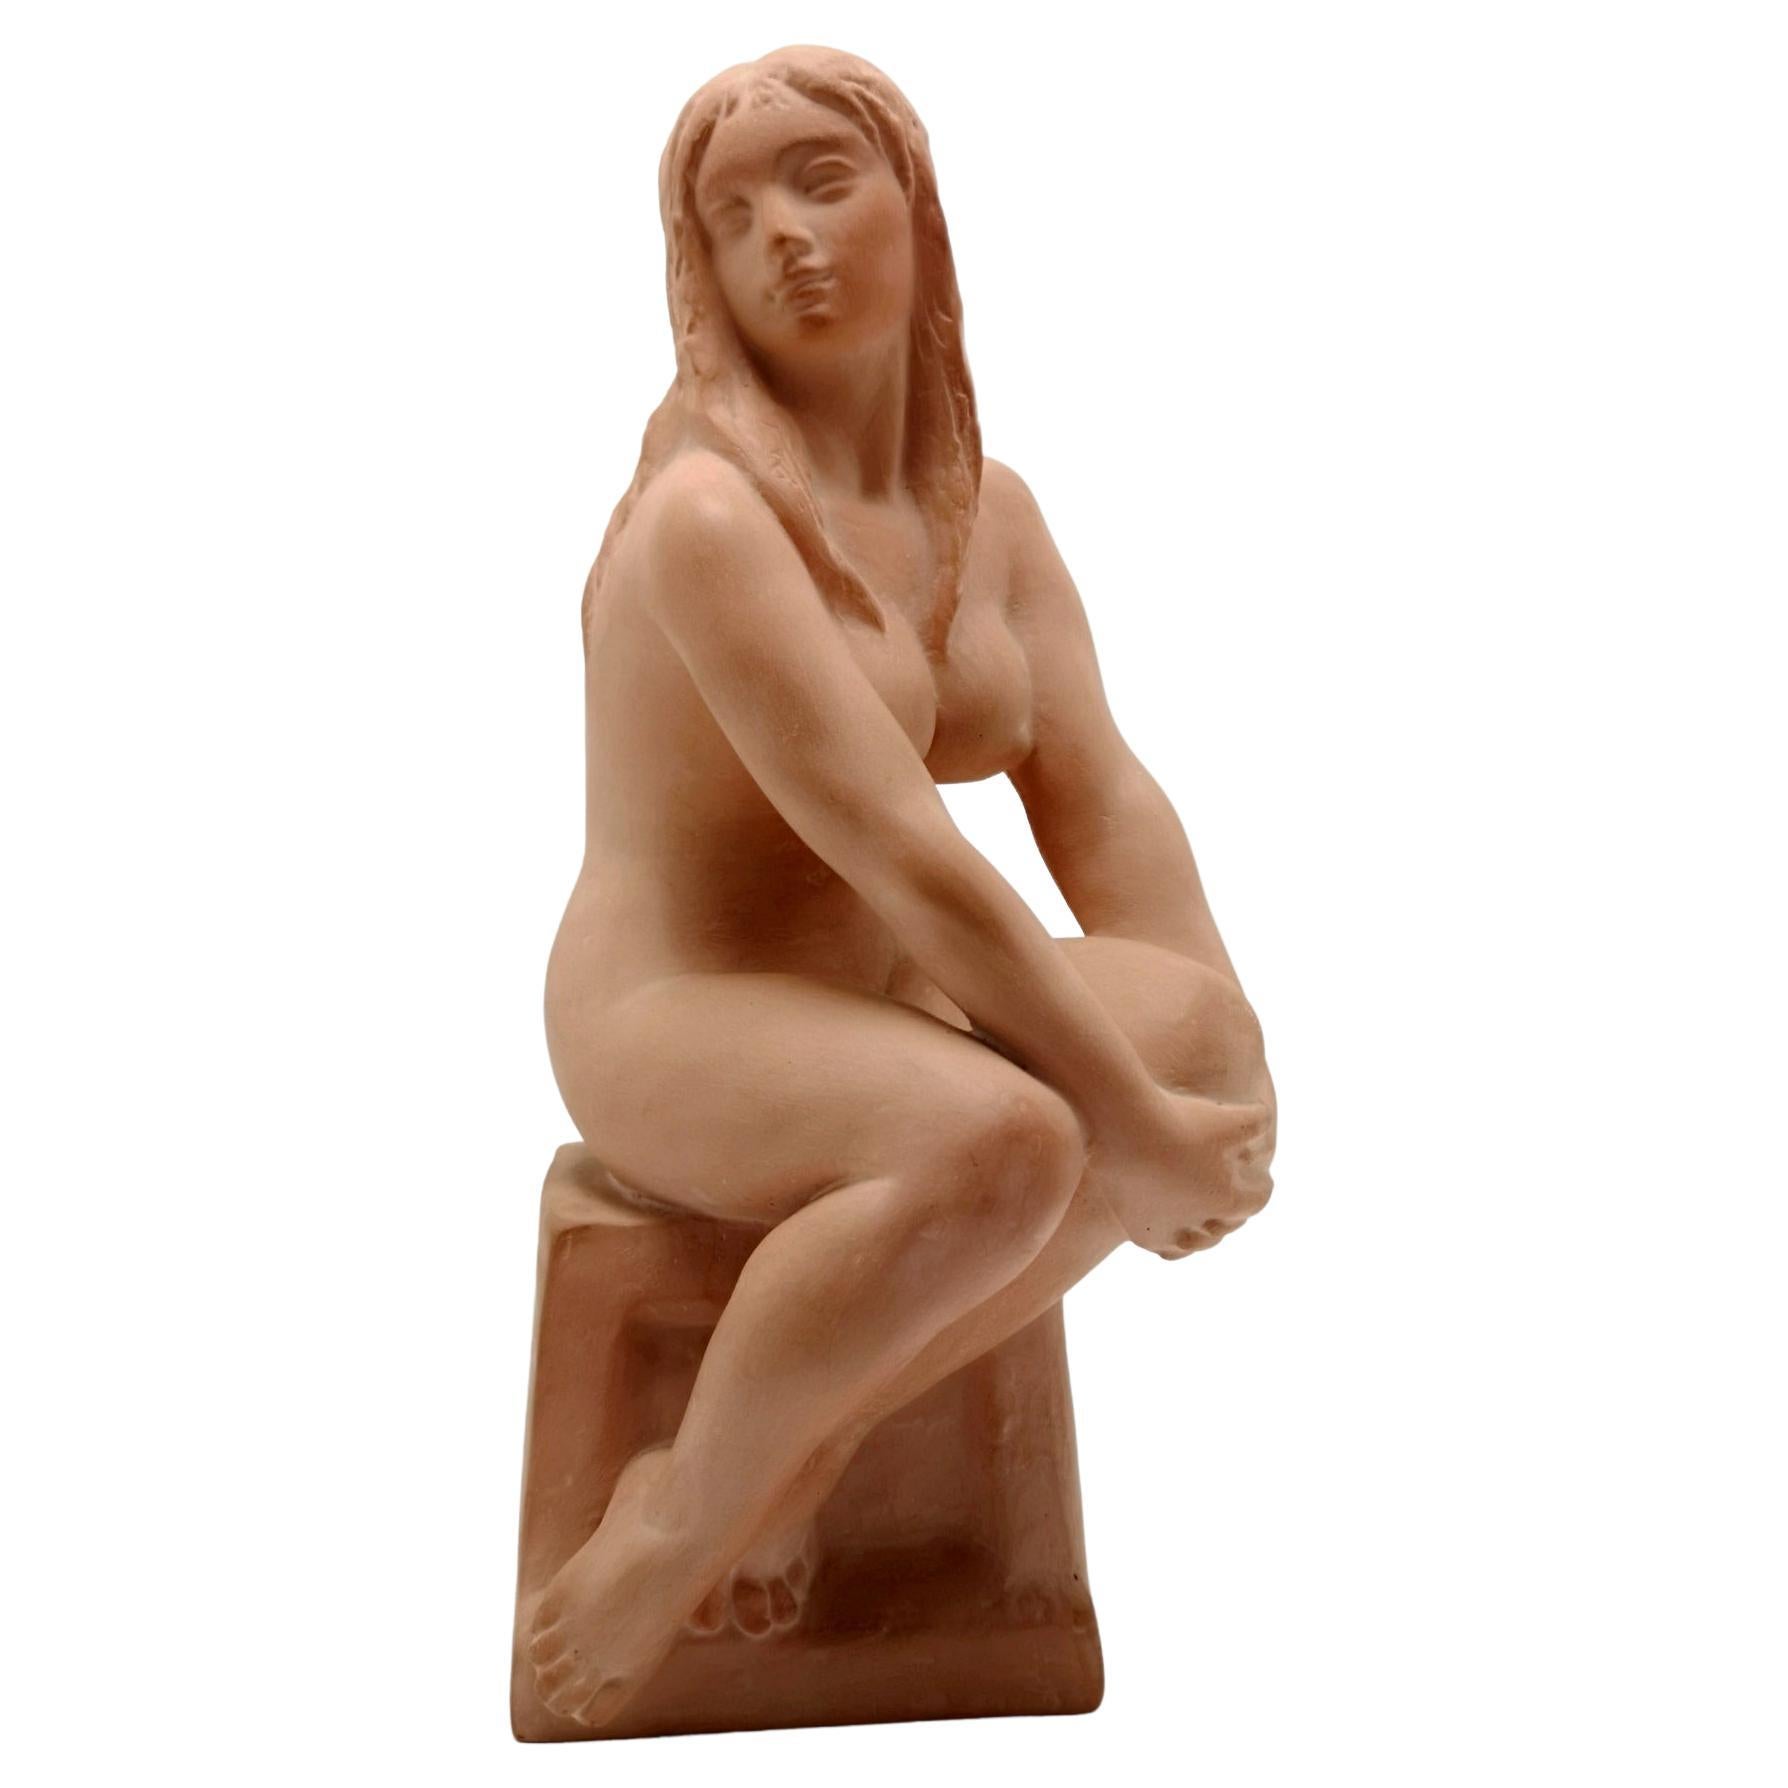 Art Deco Style Sitting Nude Terracotta Sculpture, by Sculptist Kelemen, 1973 For Sale